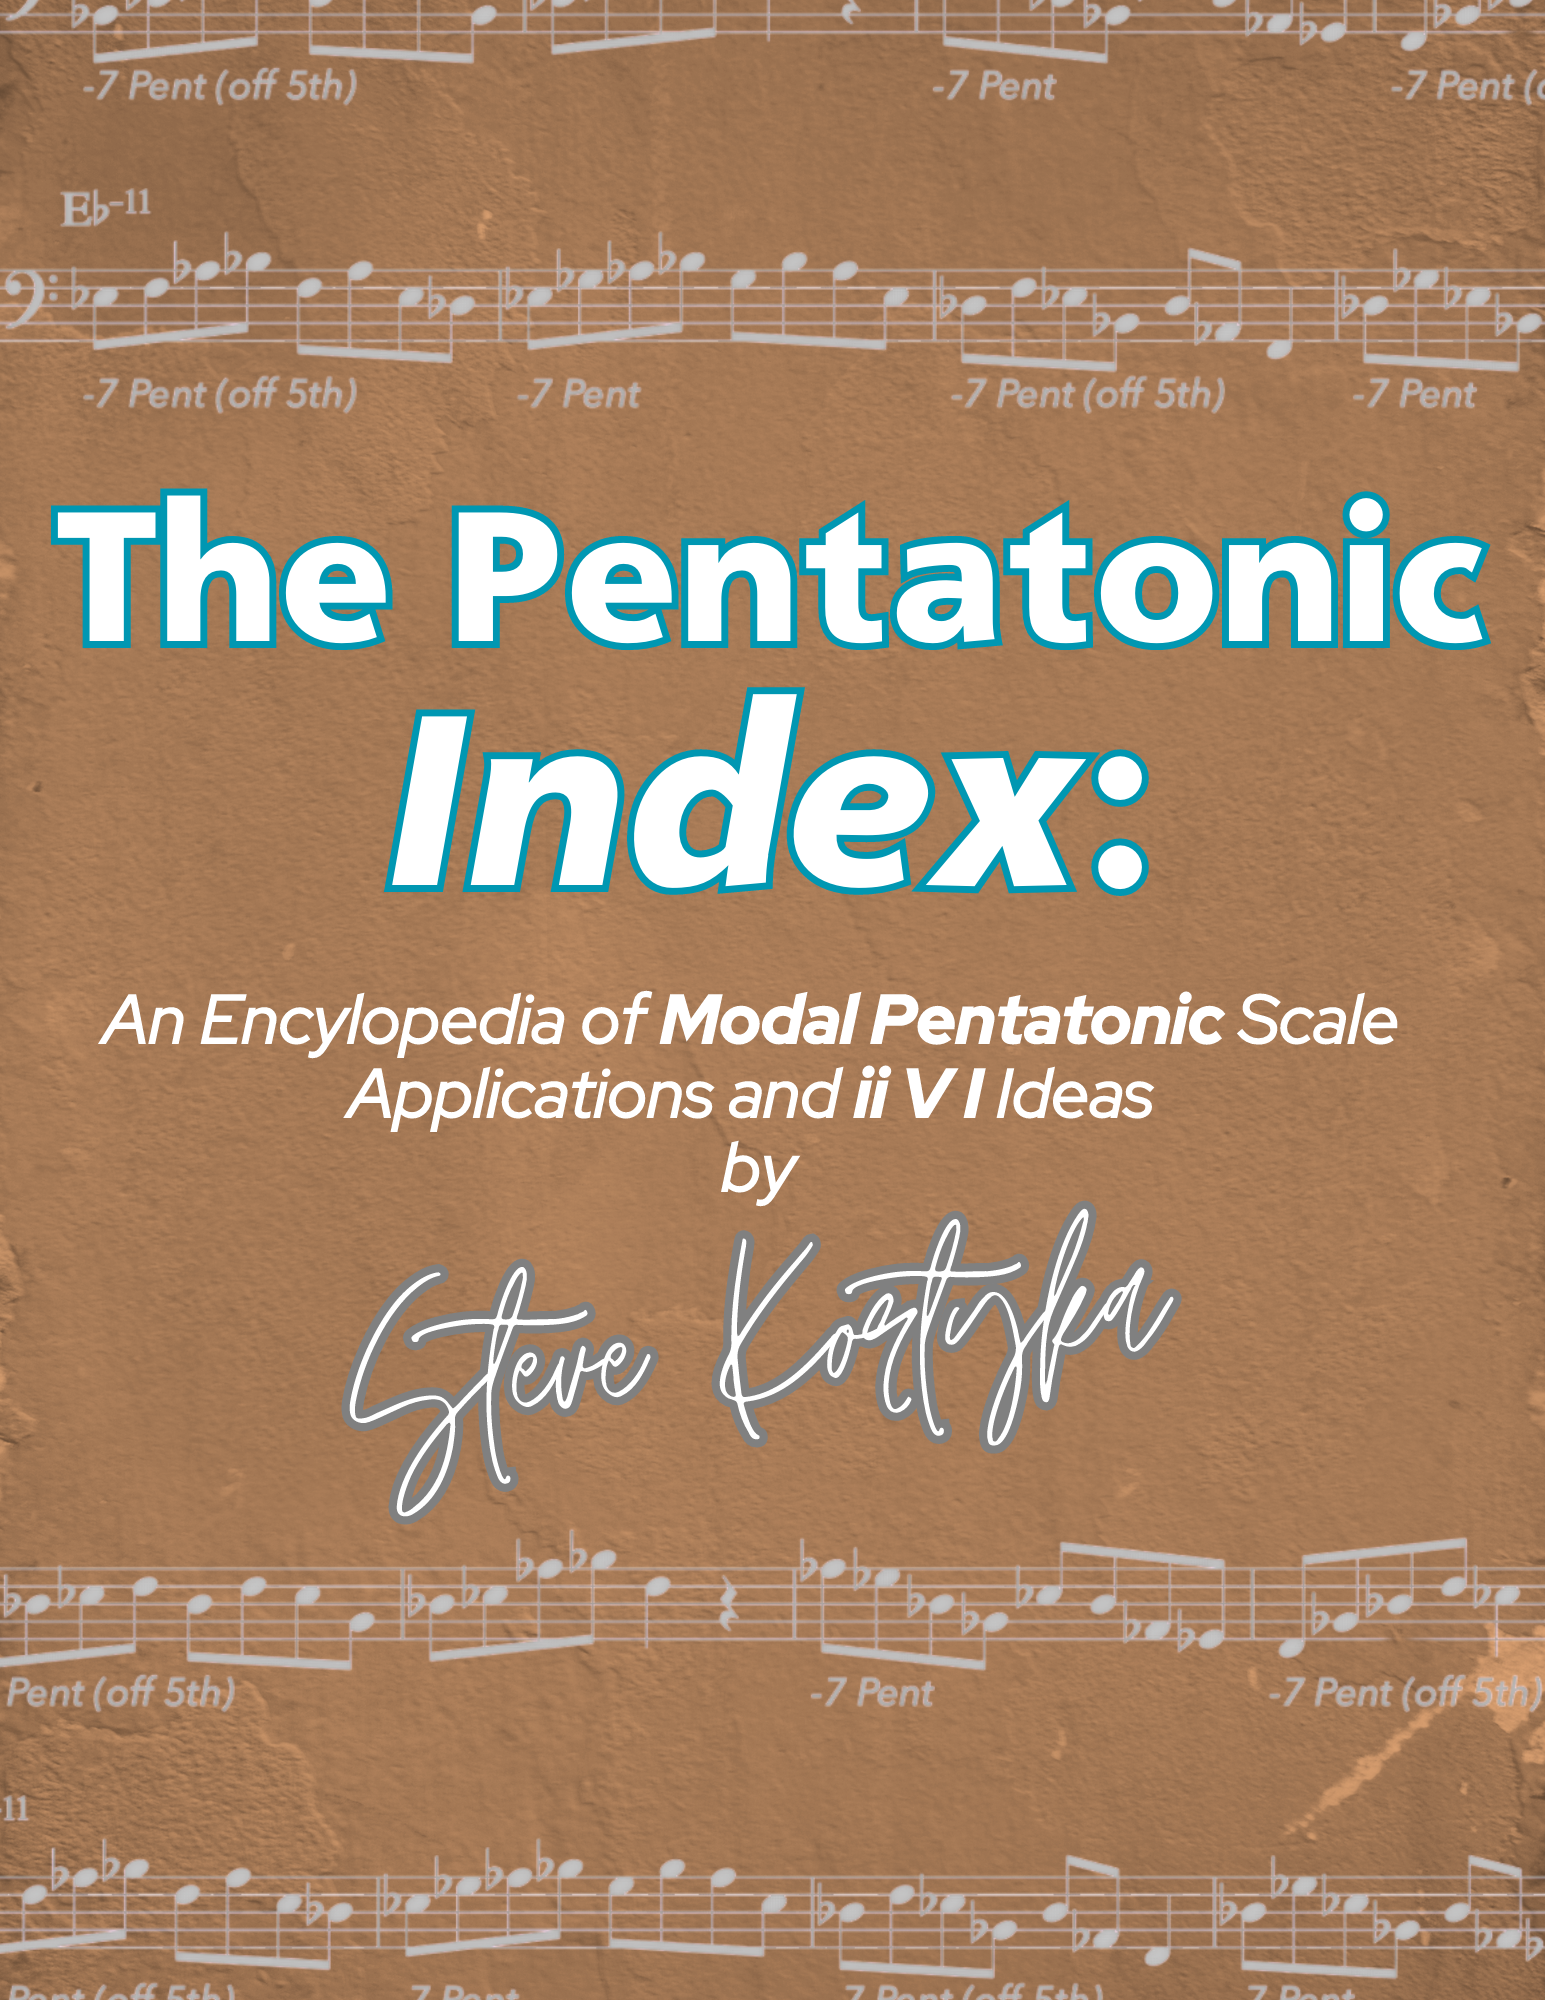 Pentatonic Index Soundcloud Thumb (1)